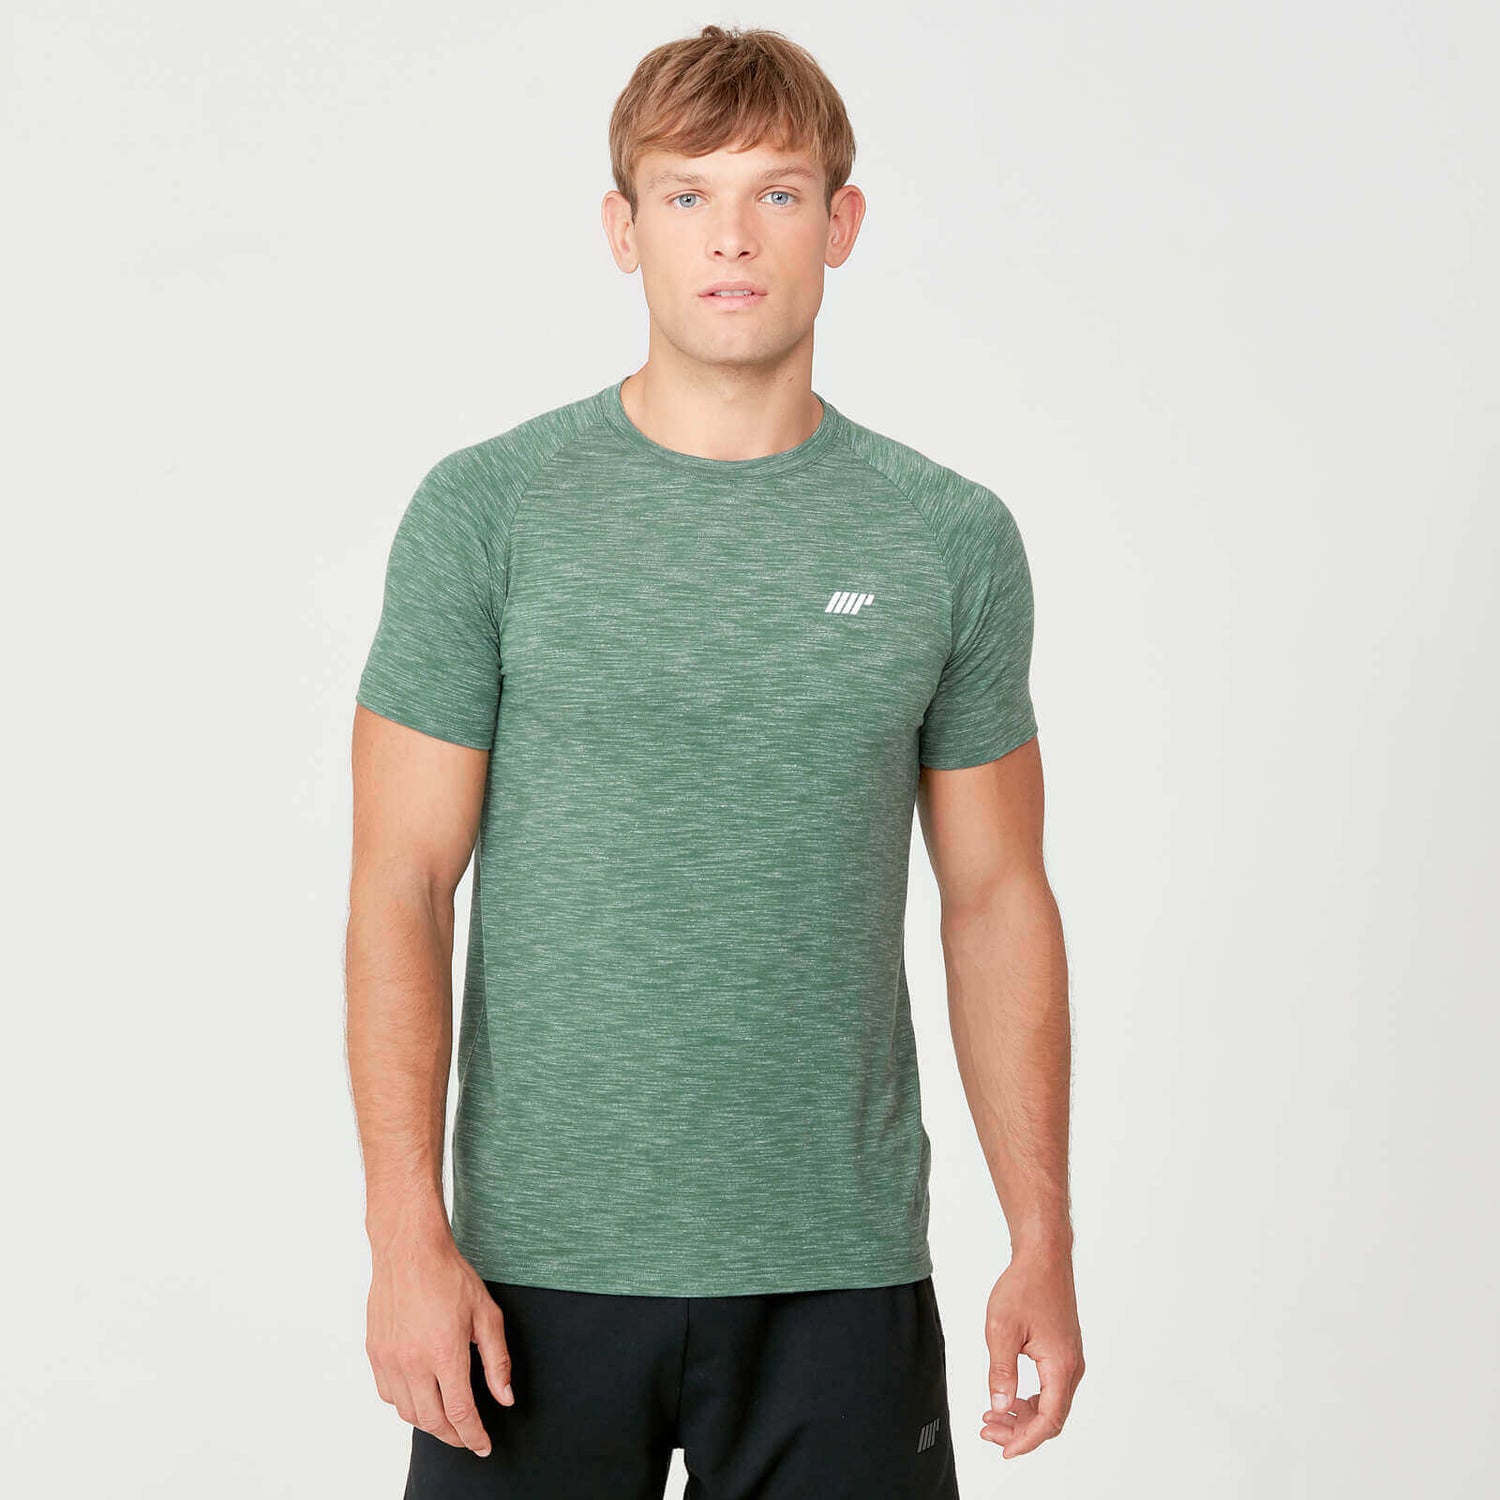 Buy Men's Performance Short-Sleeve Top, Dark Green Marl